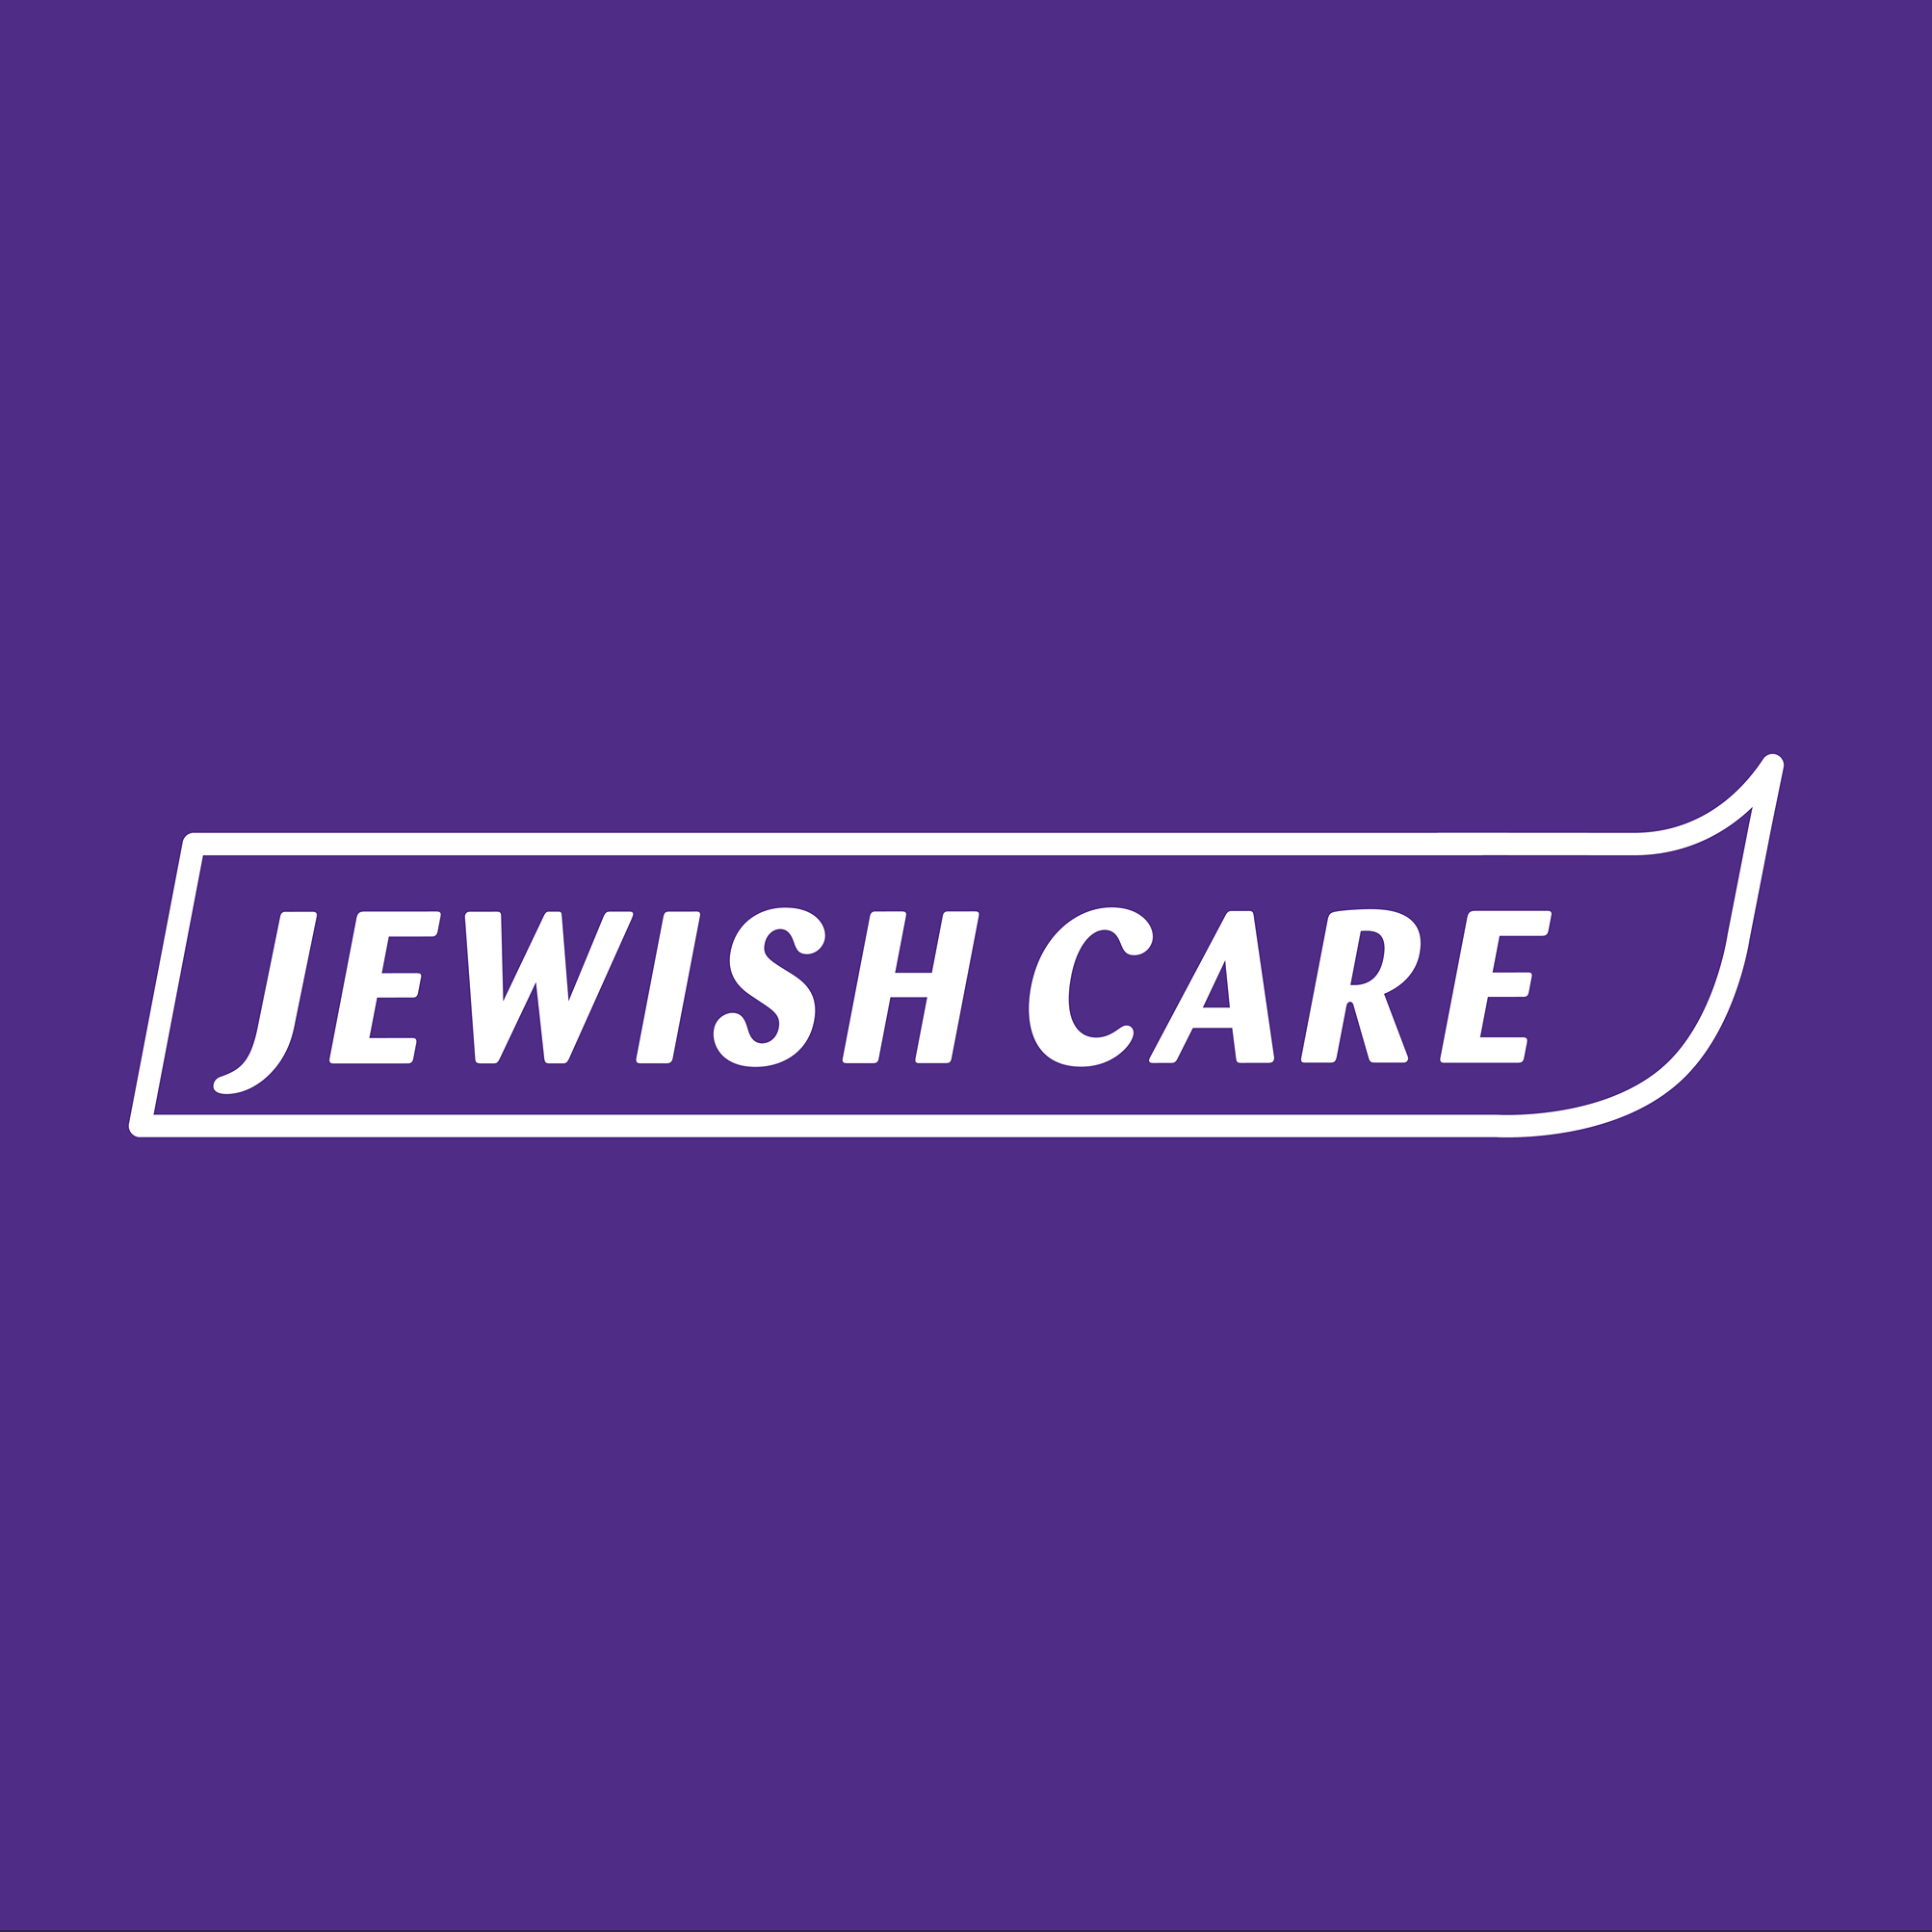 Jewish Care and Nourish Case Study